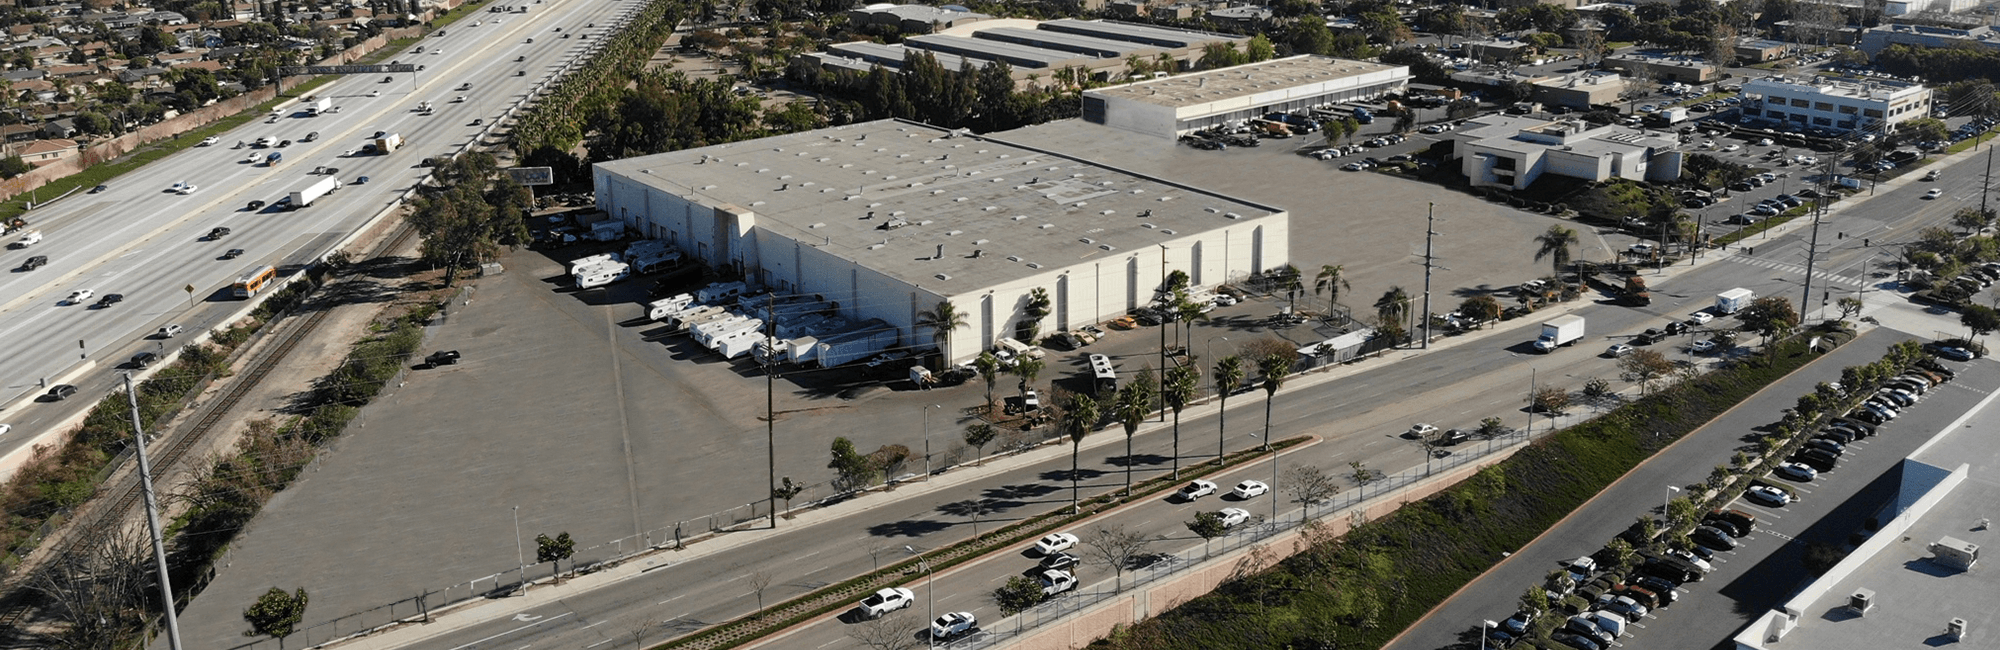 Goodman Industrial Center Anaheim January 2019